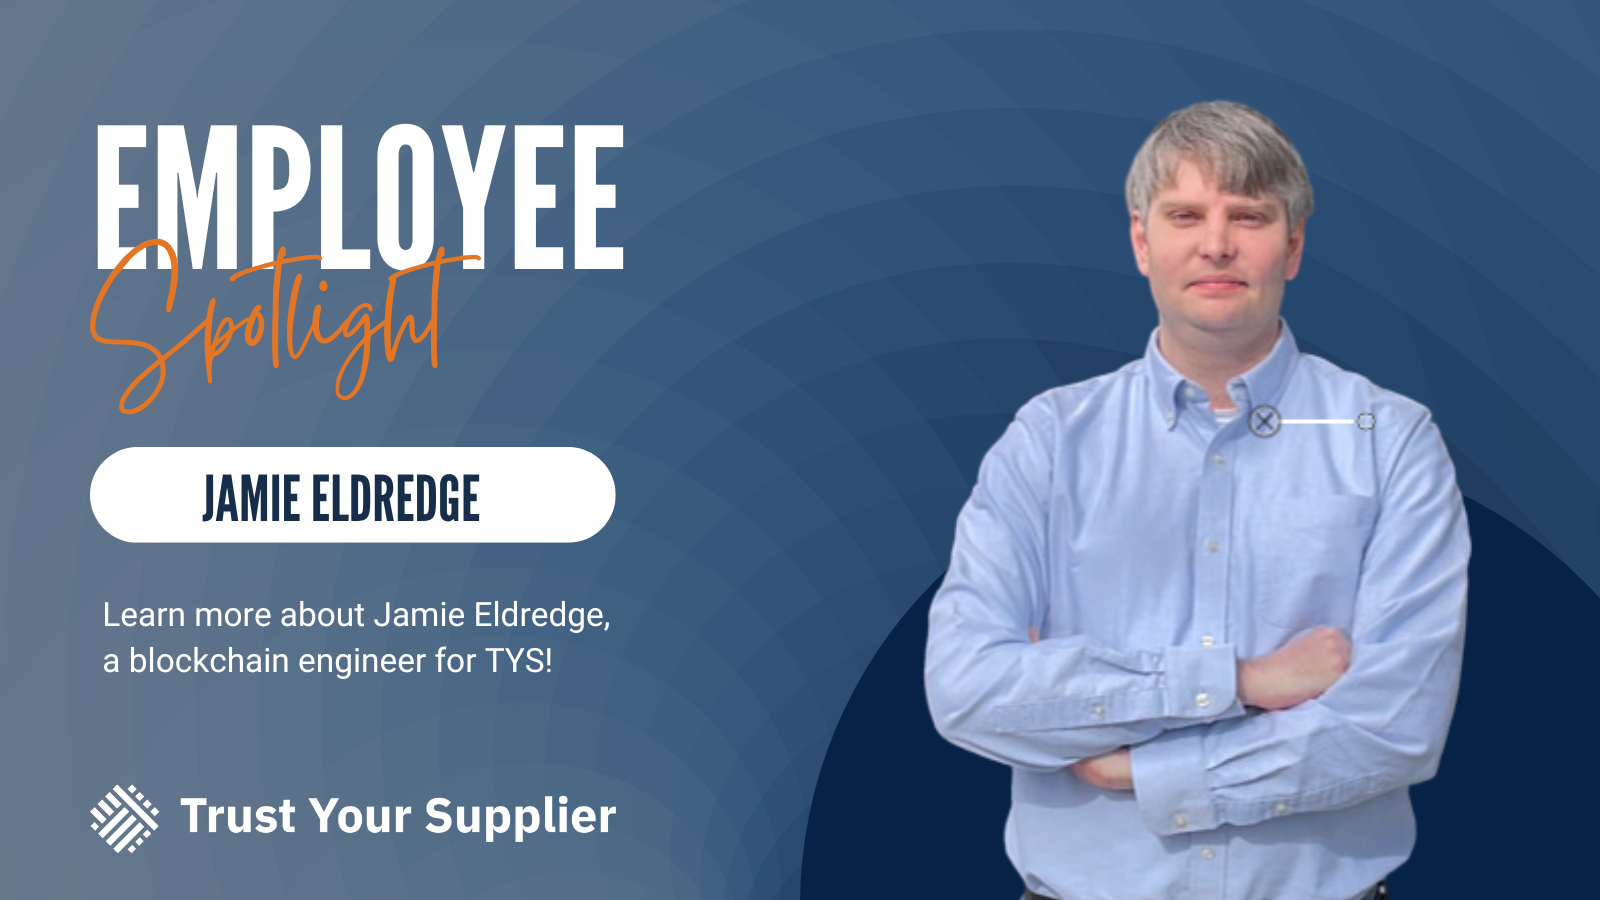 Thumbnail of Employee Spotlight with photo of Jamie Eldredge.